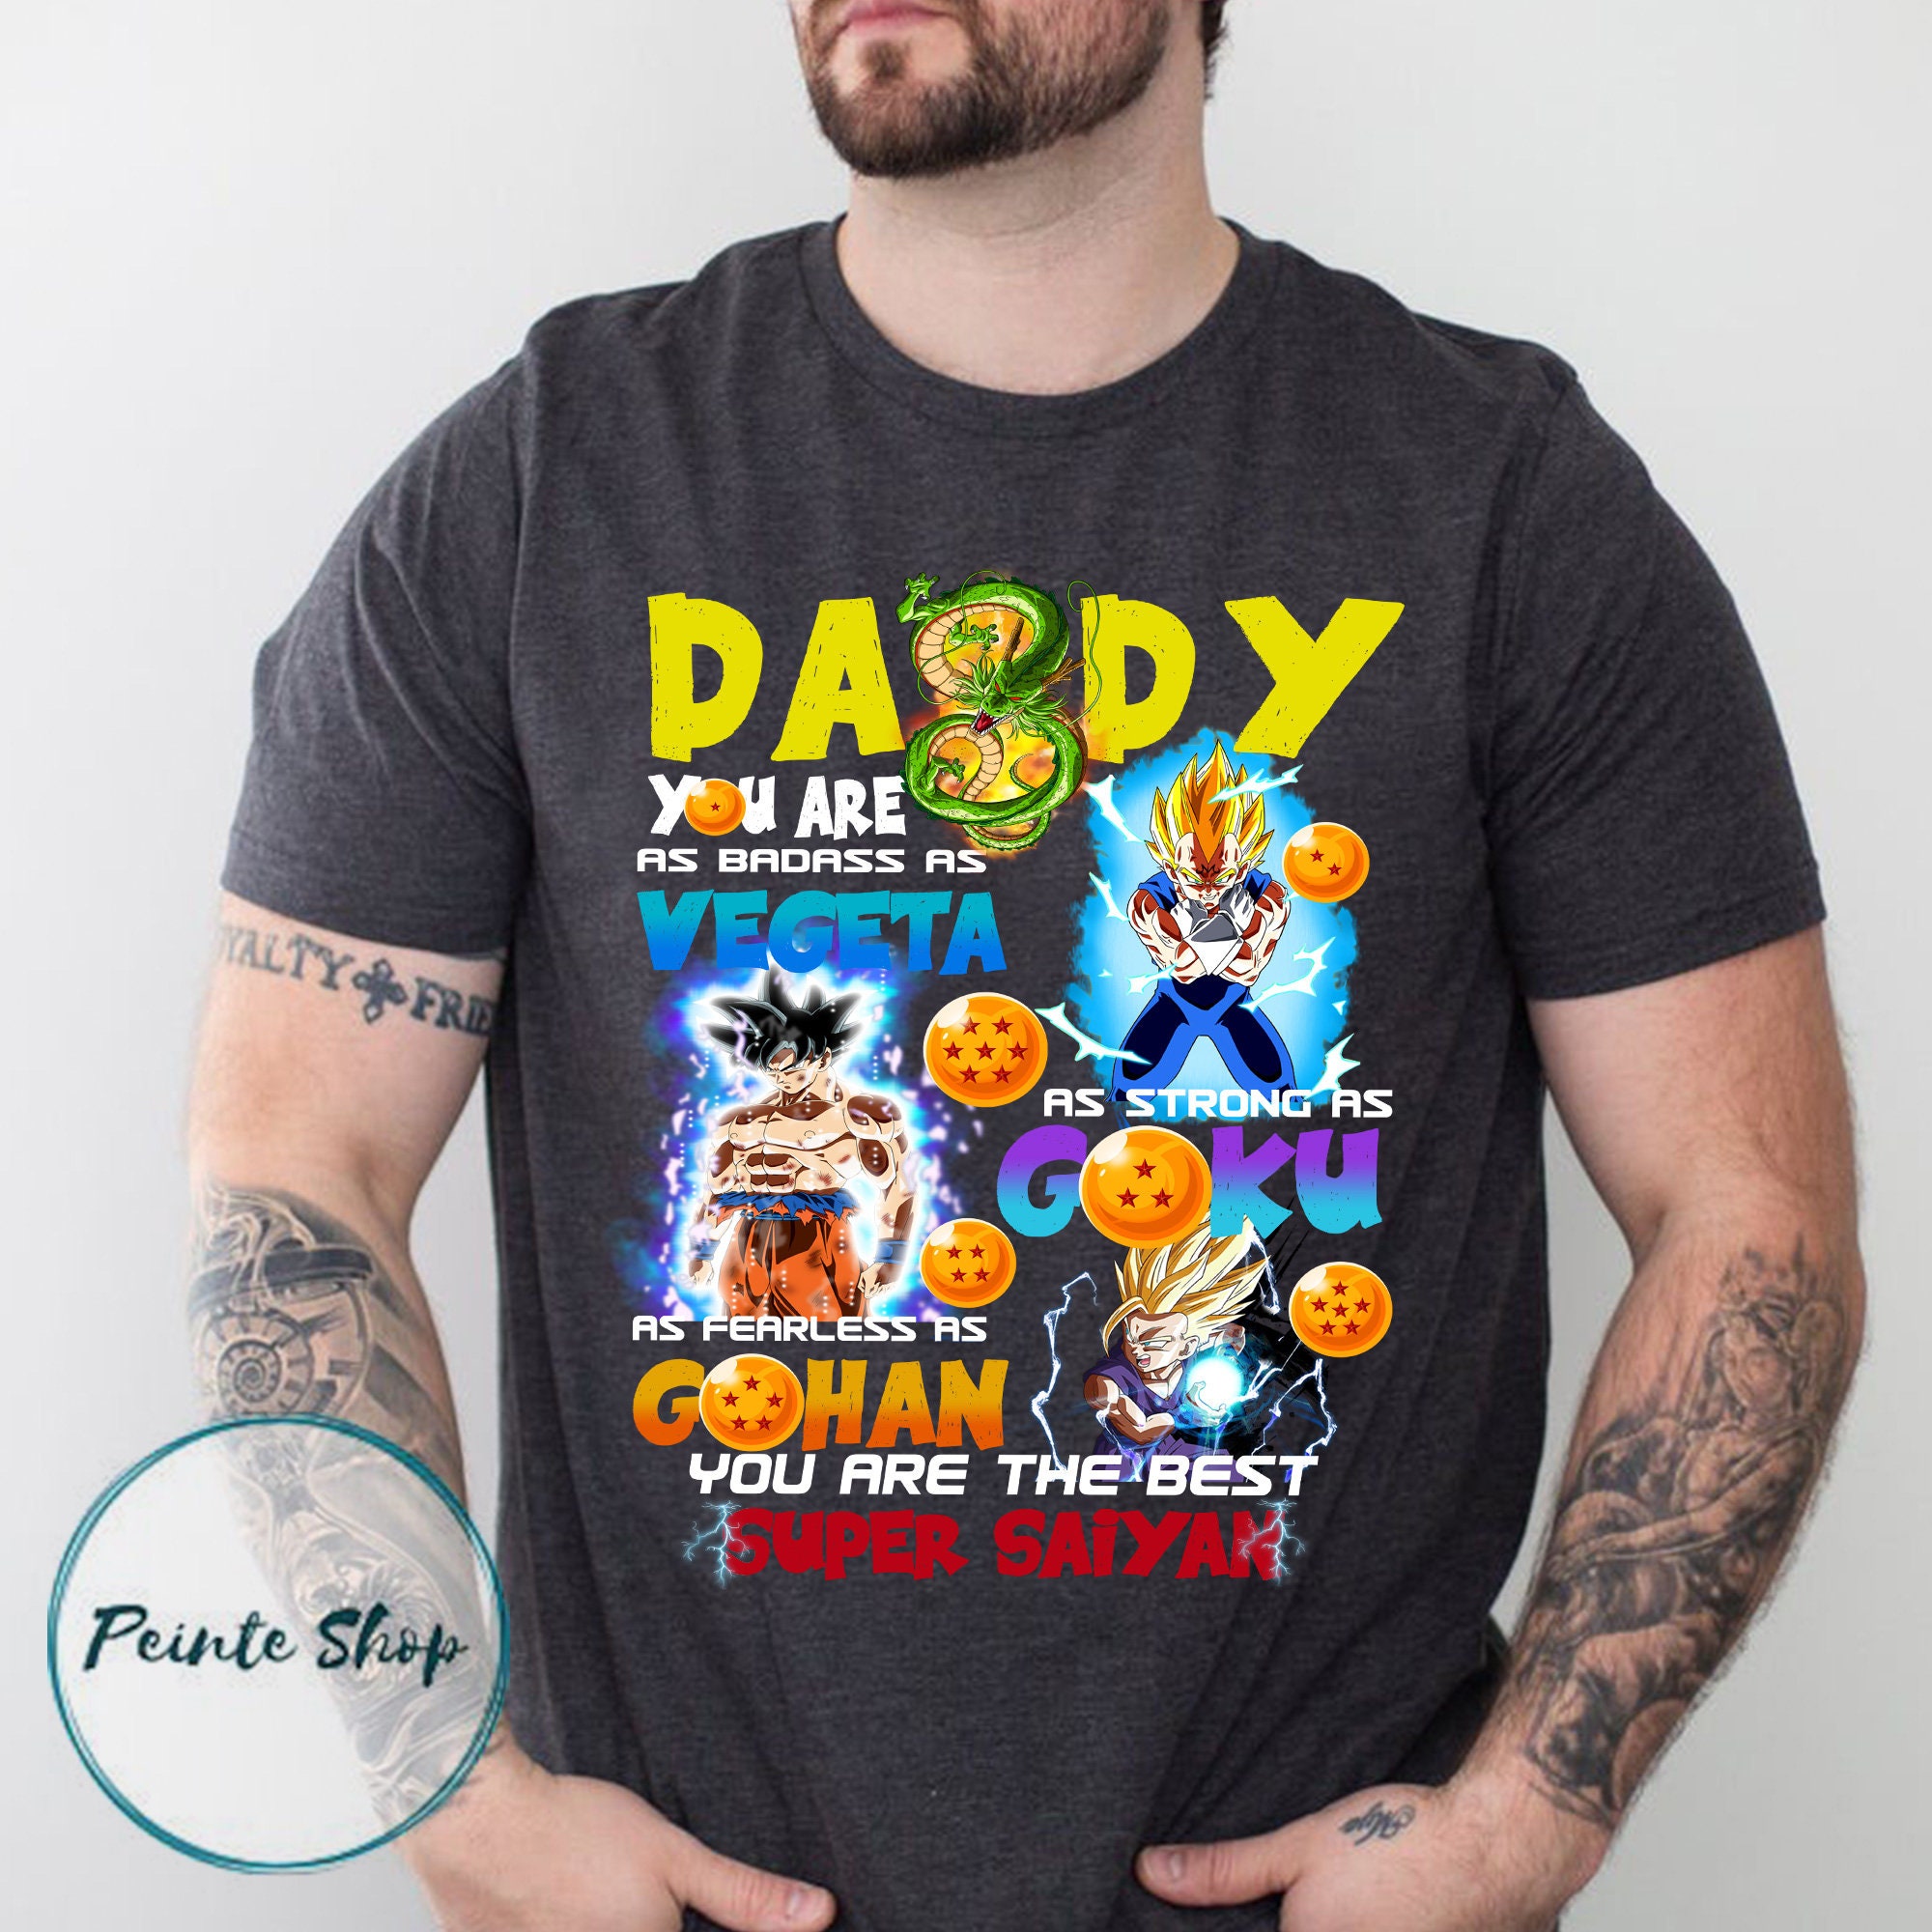 Daddy You Are The Best Super Saiyan Unisex T-shirt, Vegeta Gohan Goku, Best Dad Shirt